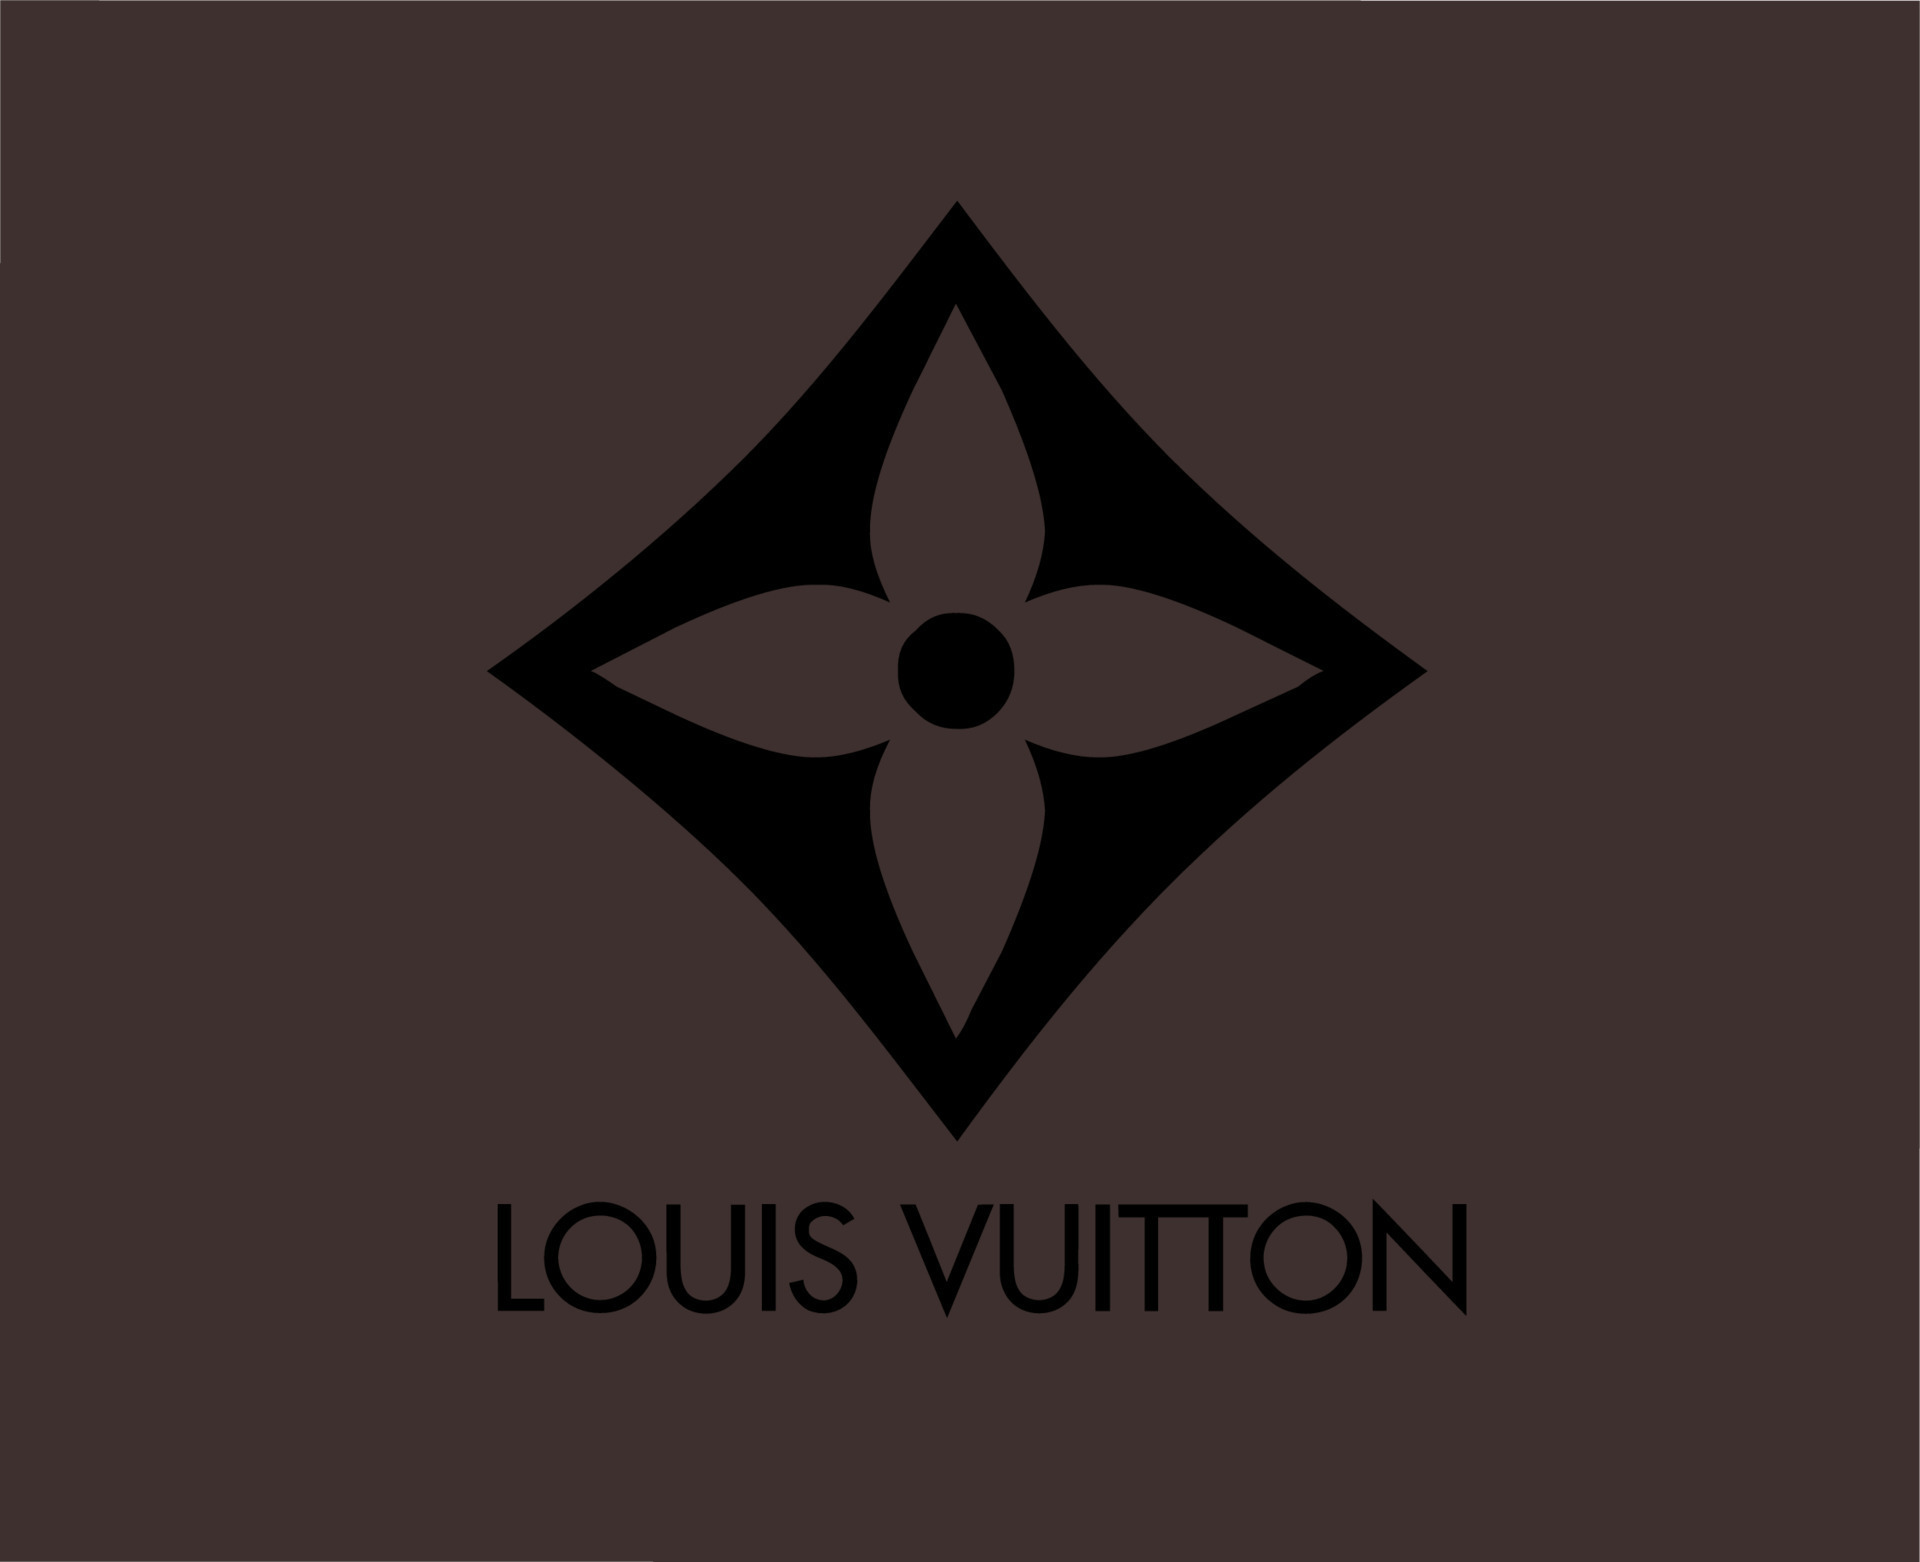 Louis Vuitton Brand Logo Background Black And White Symbol Design Clothes  Fashion Vector Illustration 23871562 Vector Art at Vecteezy